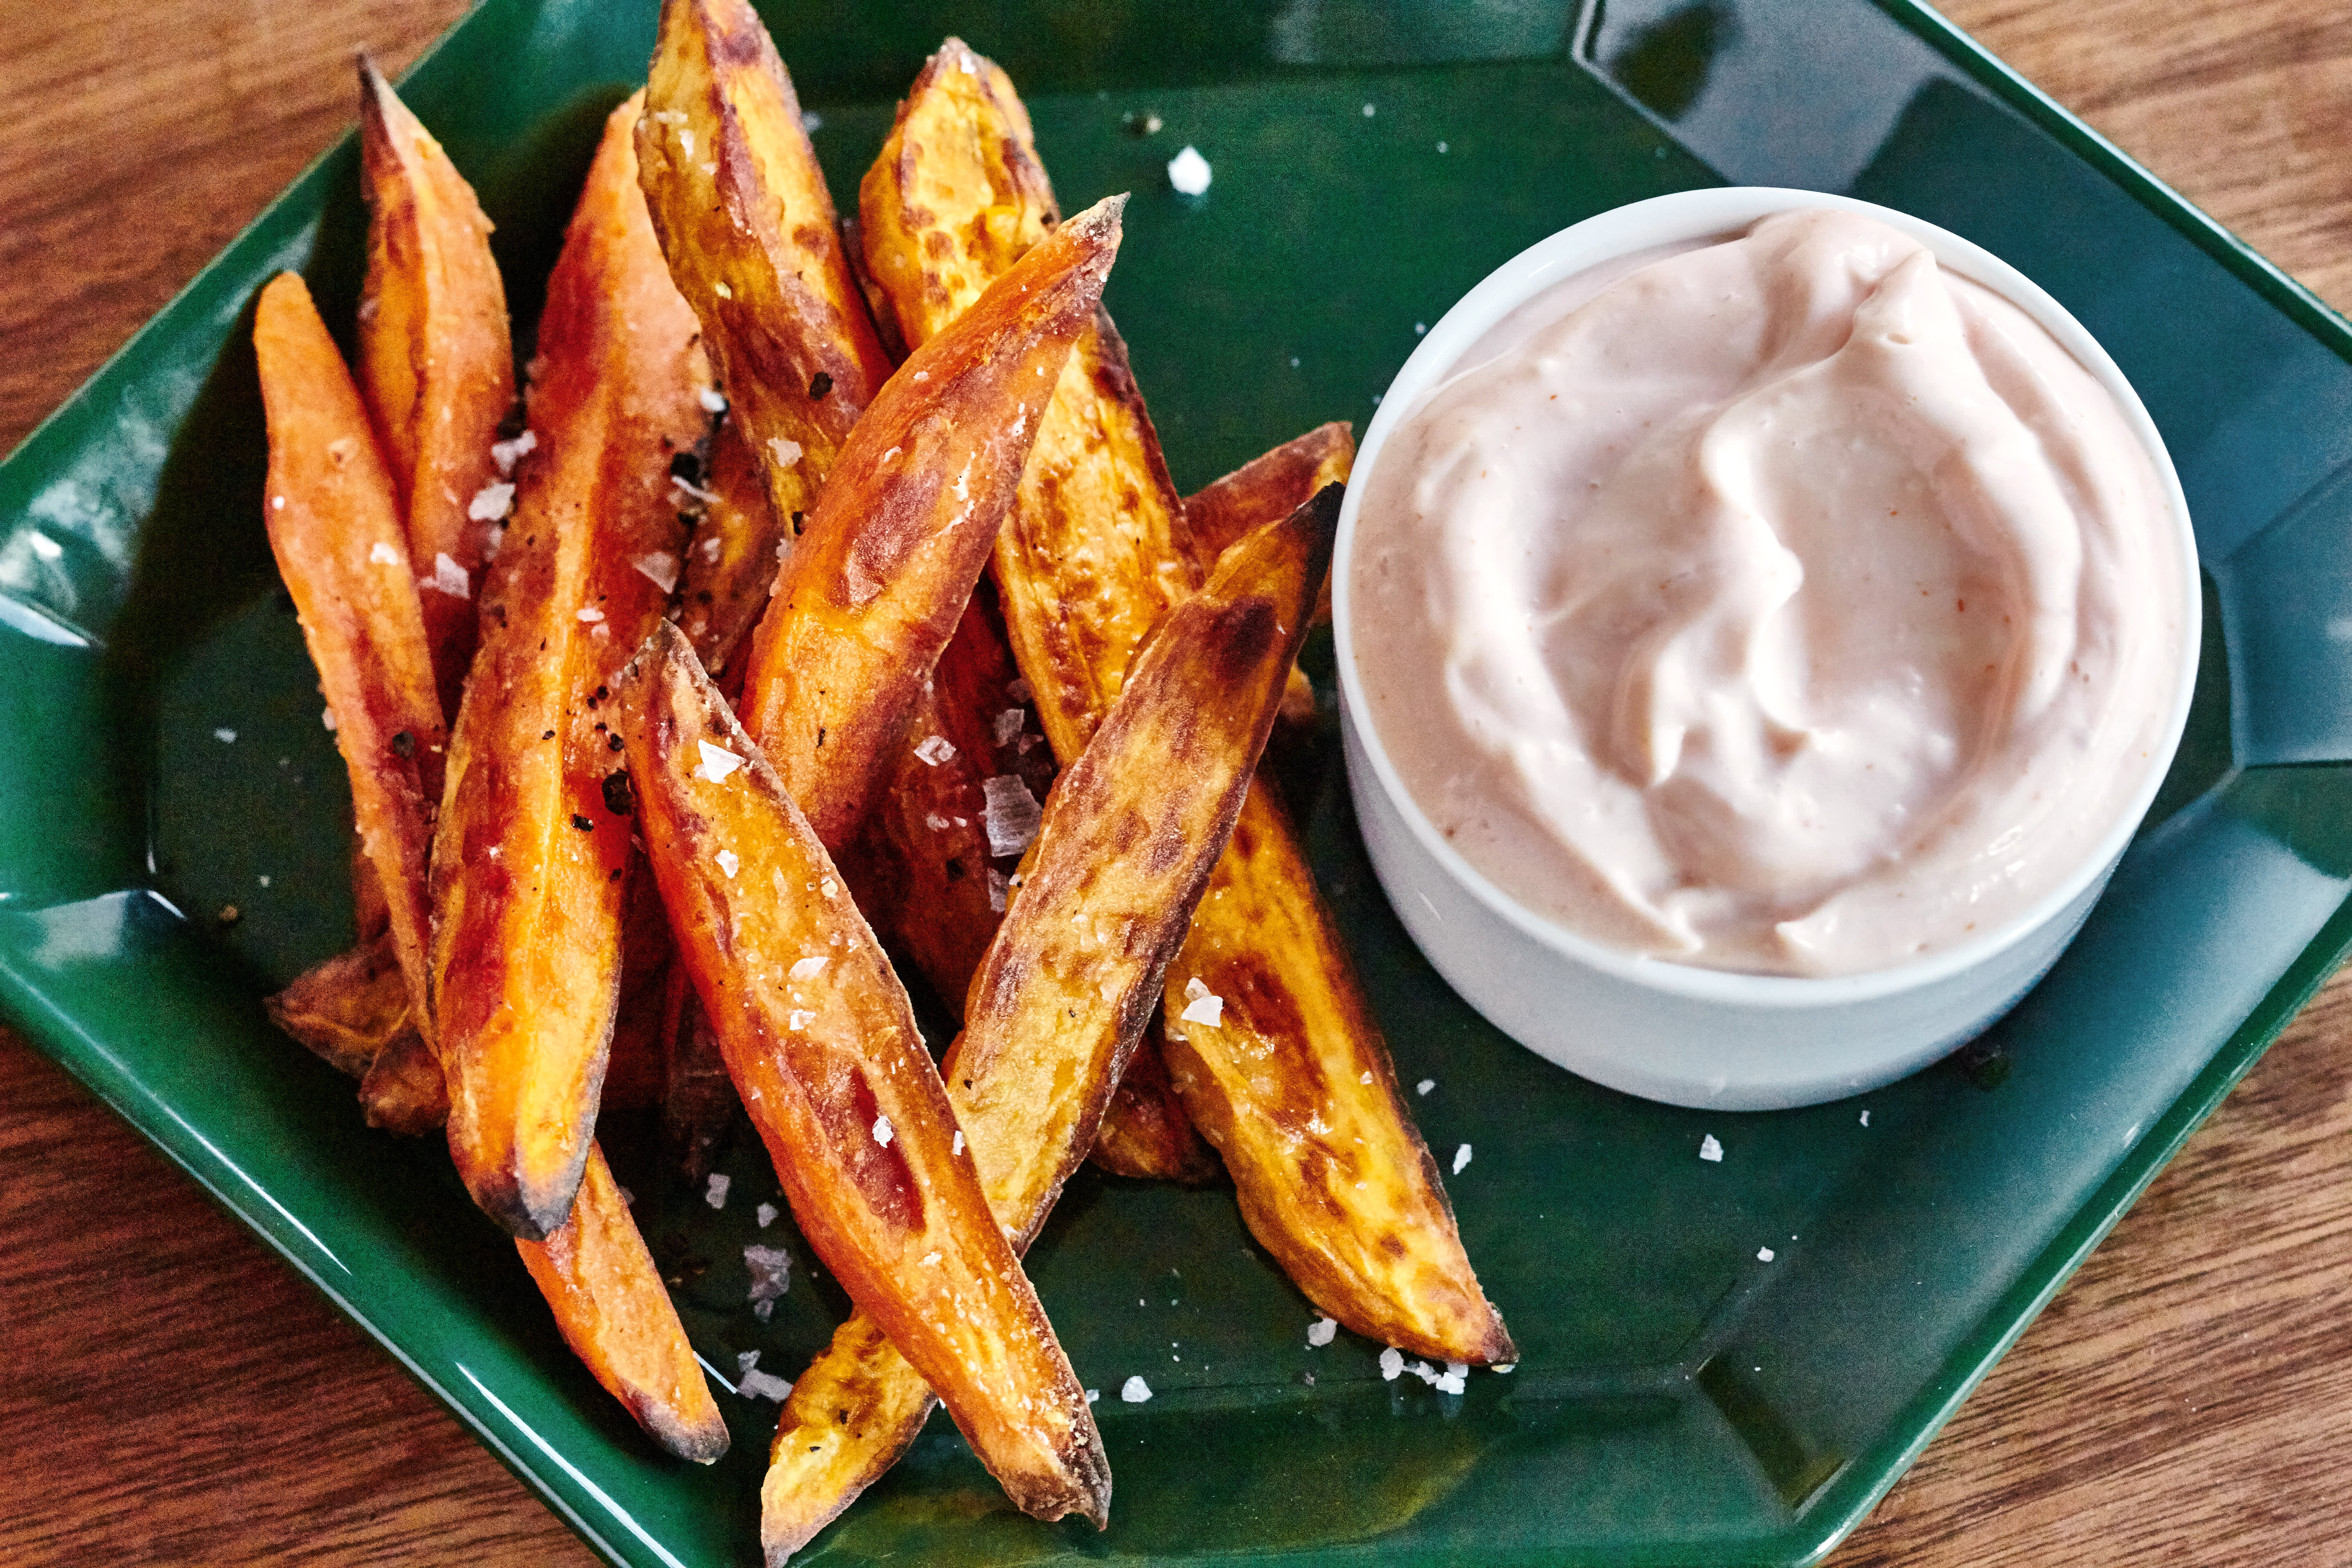 Best Homemade Sweet Potato Fries Recipe Ever! - The Recipe Critic